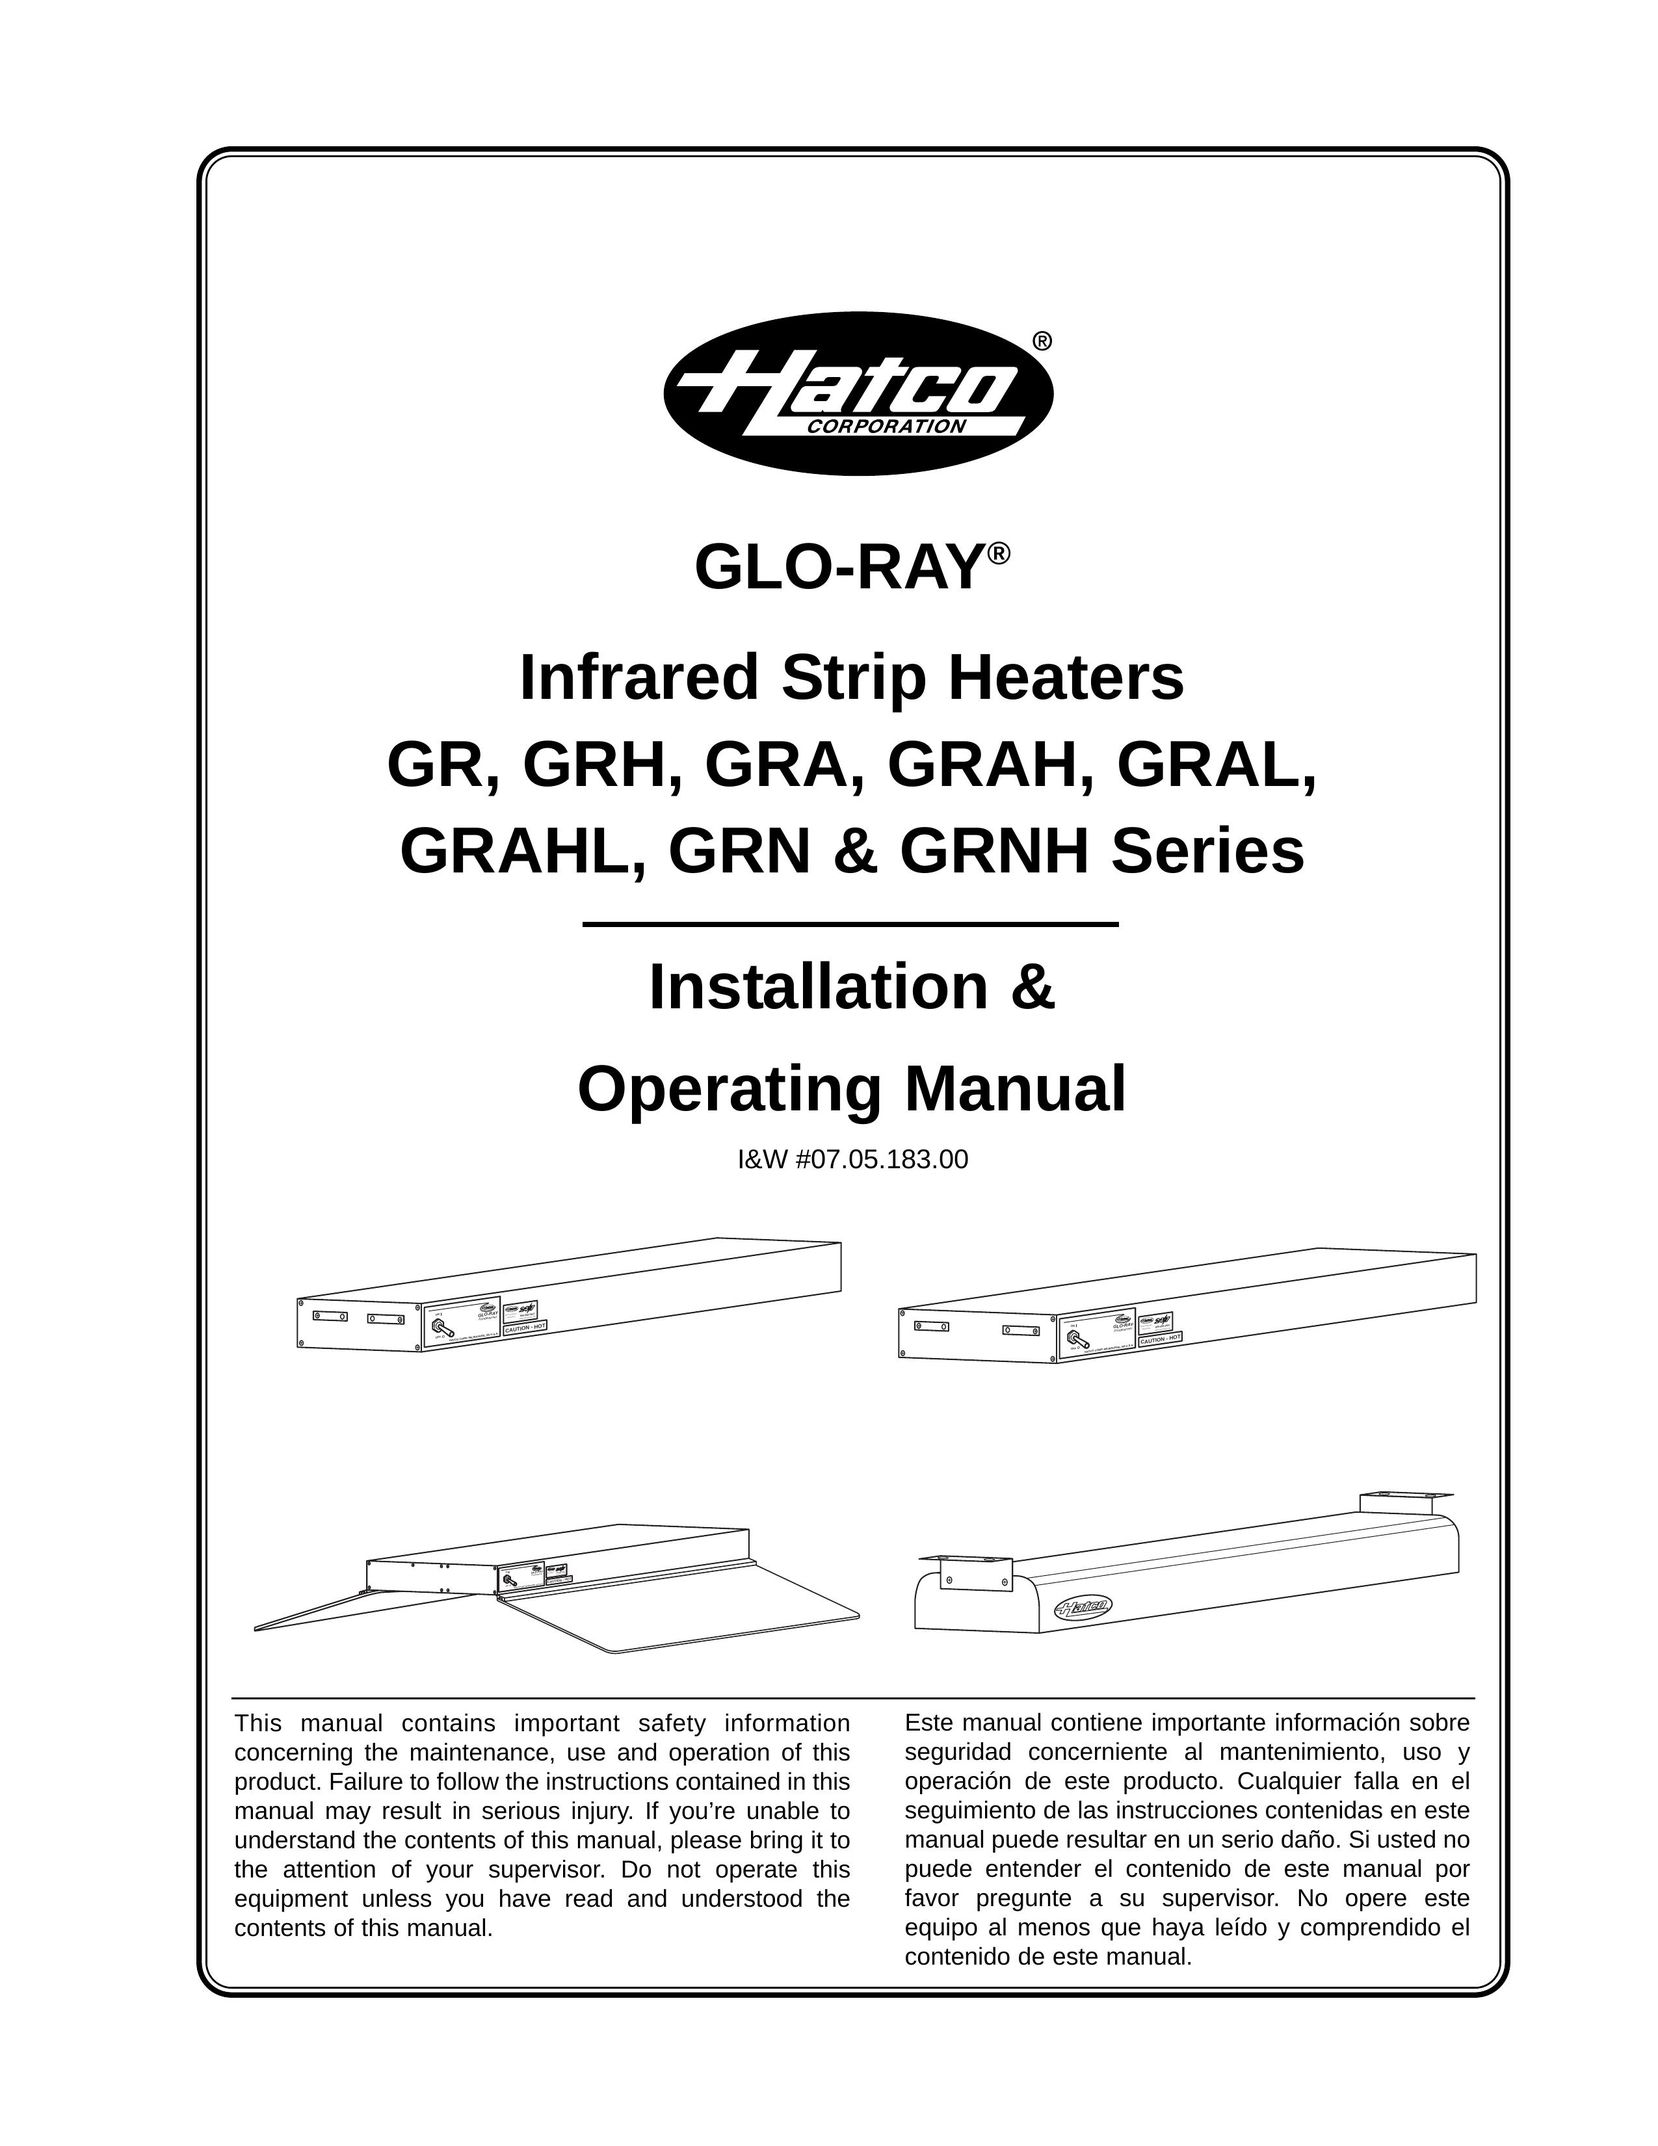 Hatco GR Printer Accessories User Manual